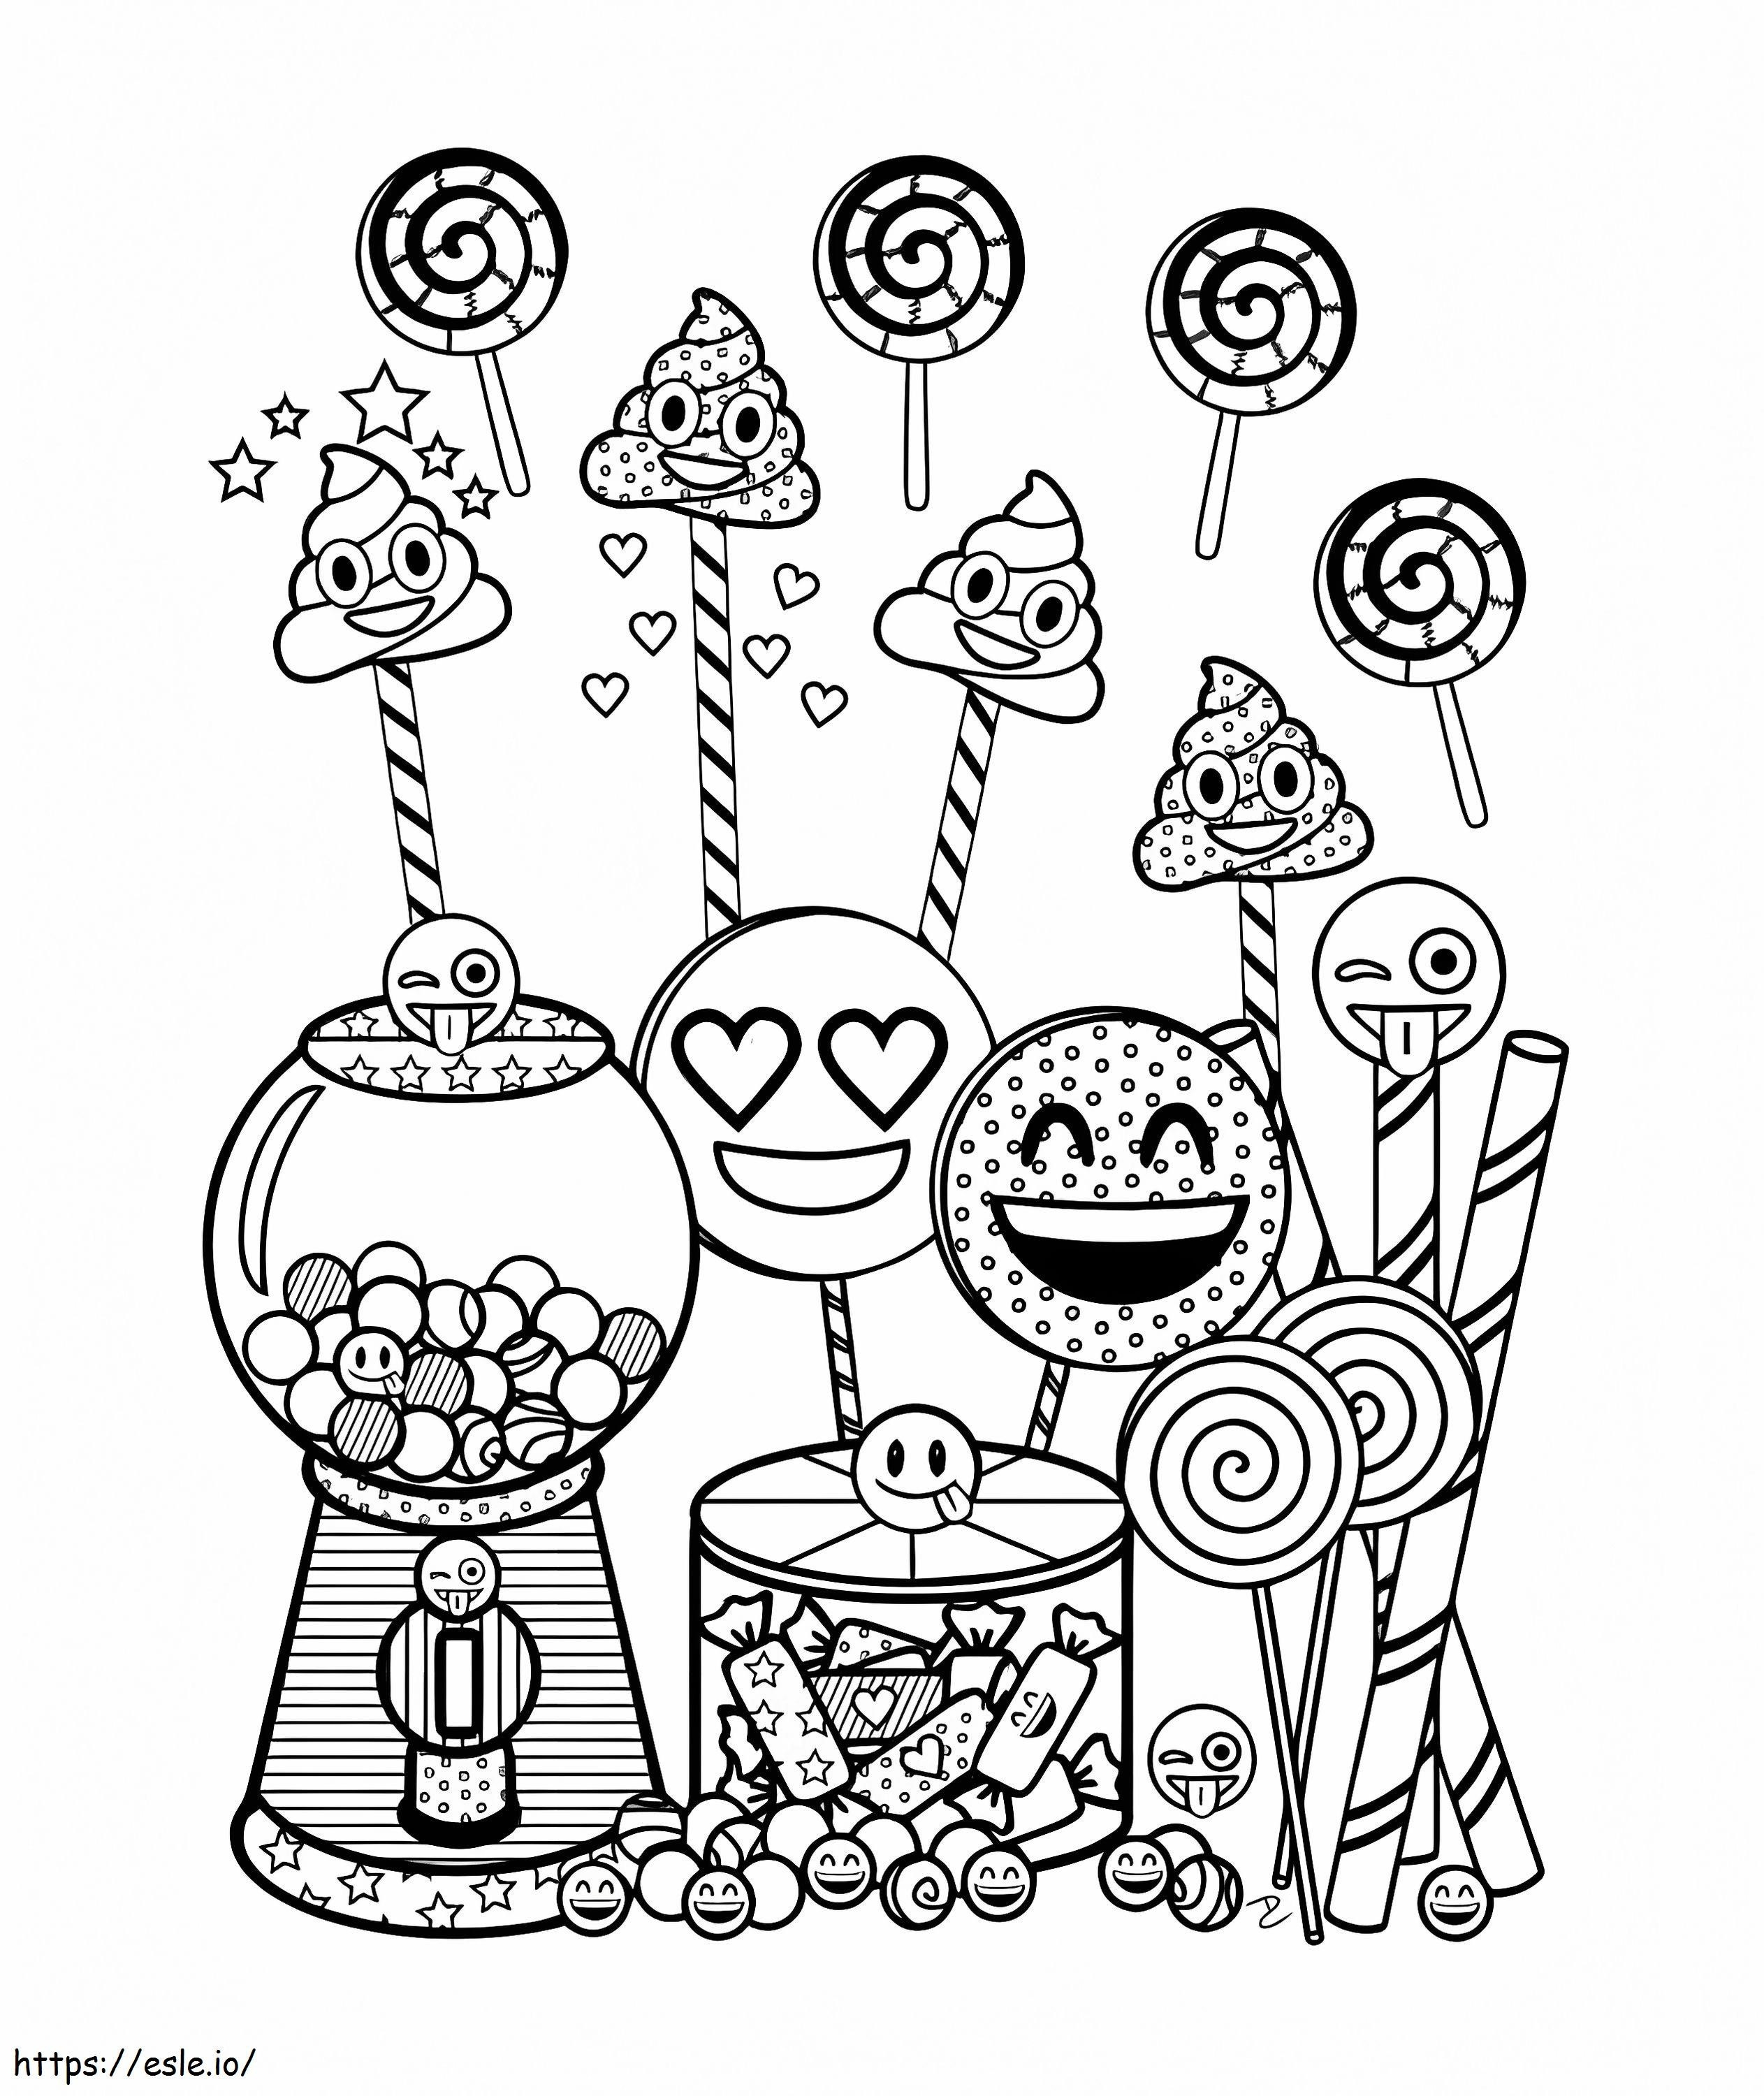 Birthday Party Emojis coloring page